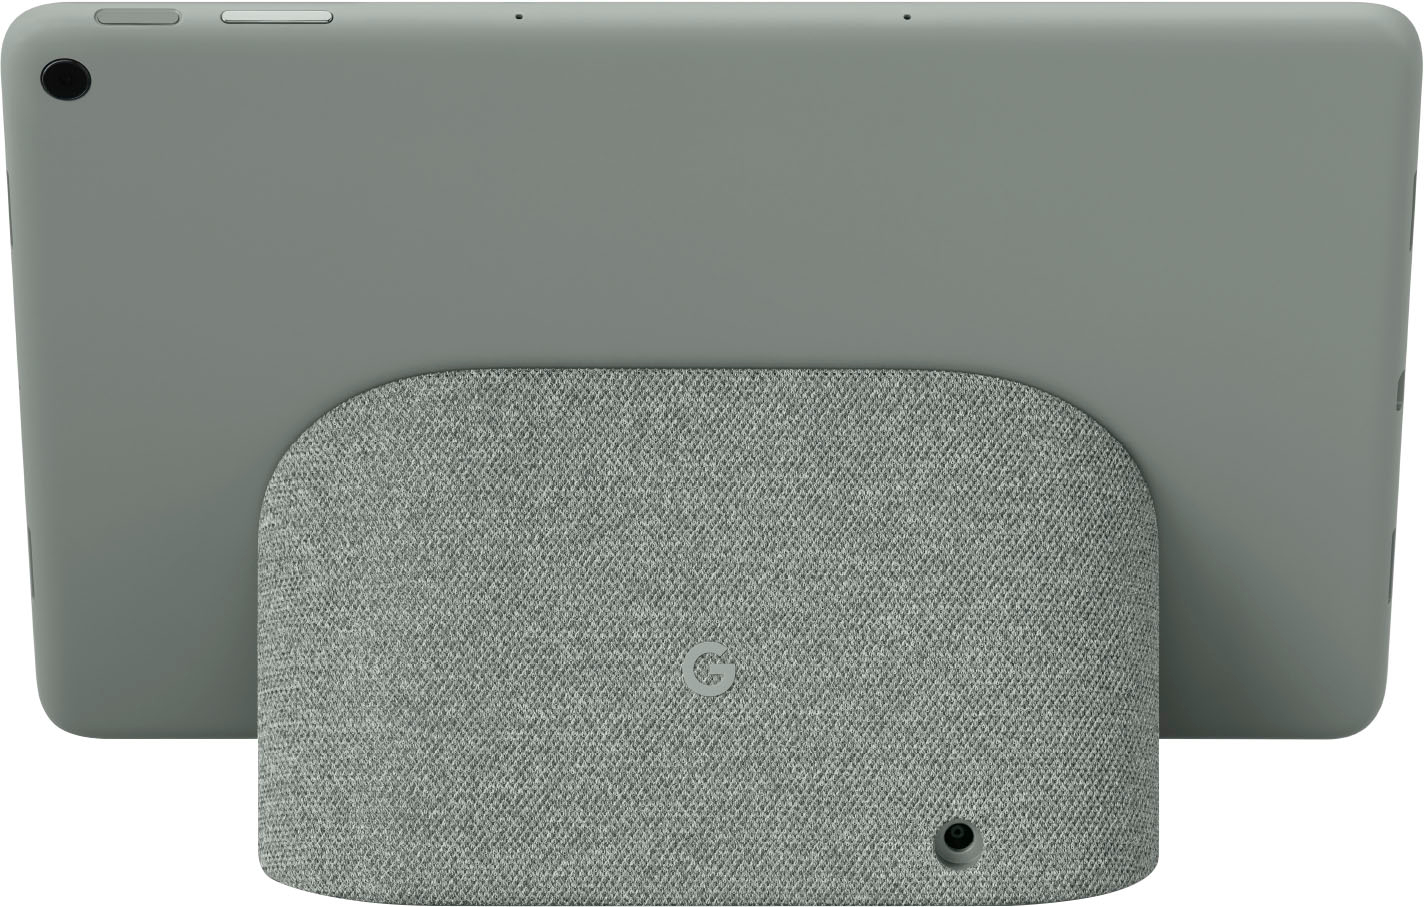 Google Pixel Tablet with Charging Speaker Dock 11 Android Tablet 128GB  Wi-Fi Hazel GA04754-US - Best Buy